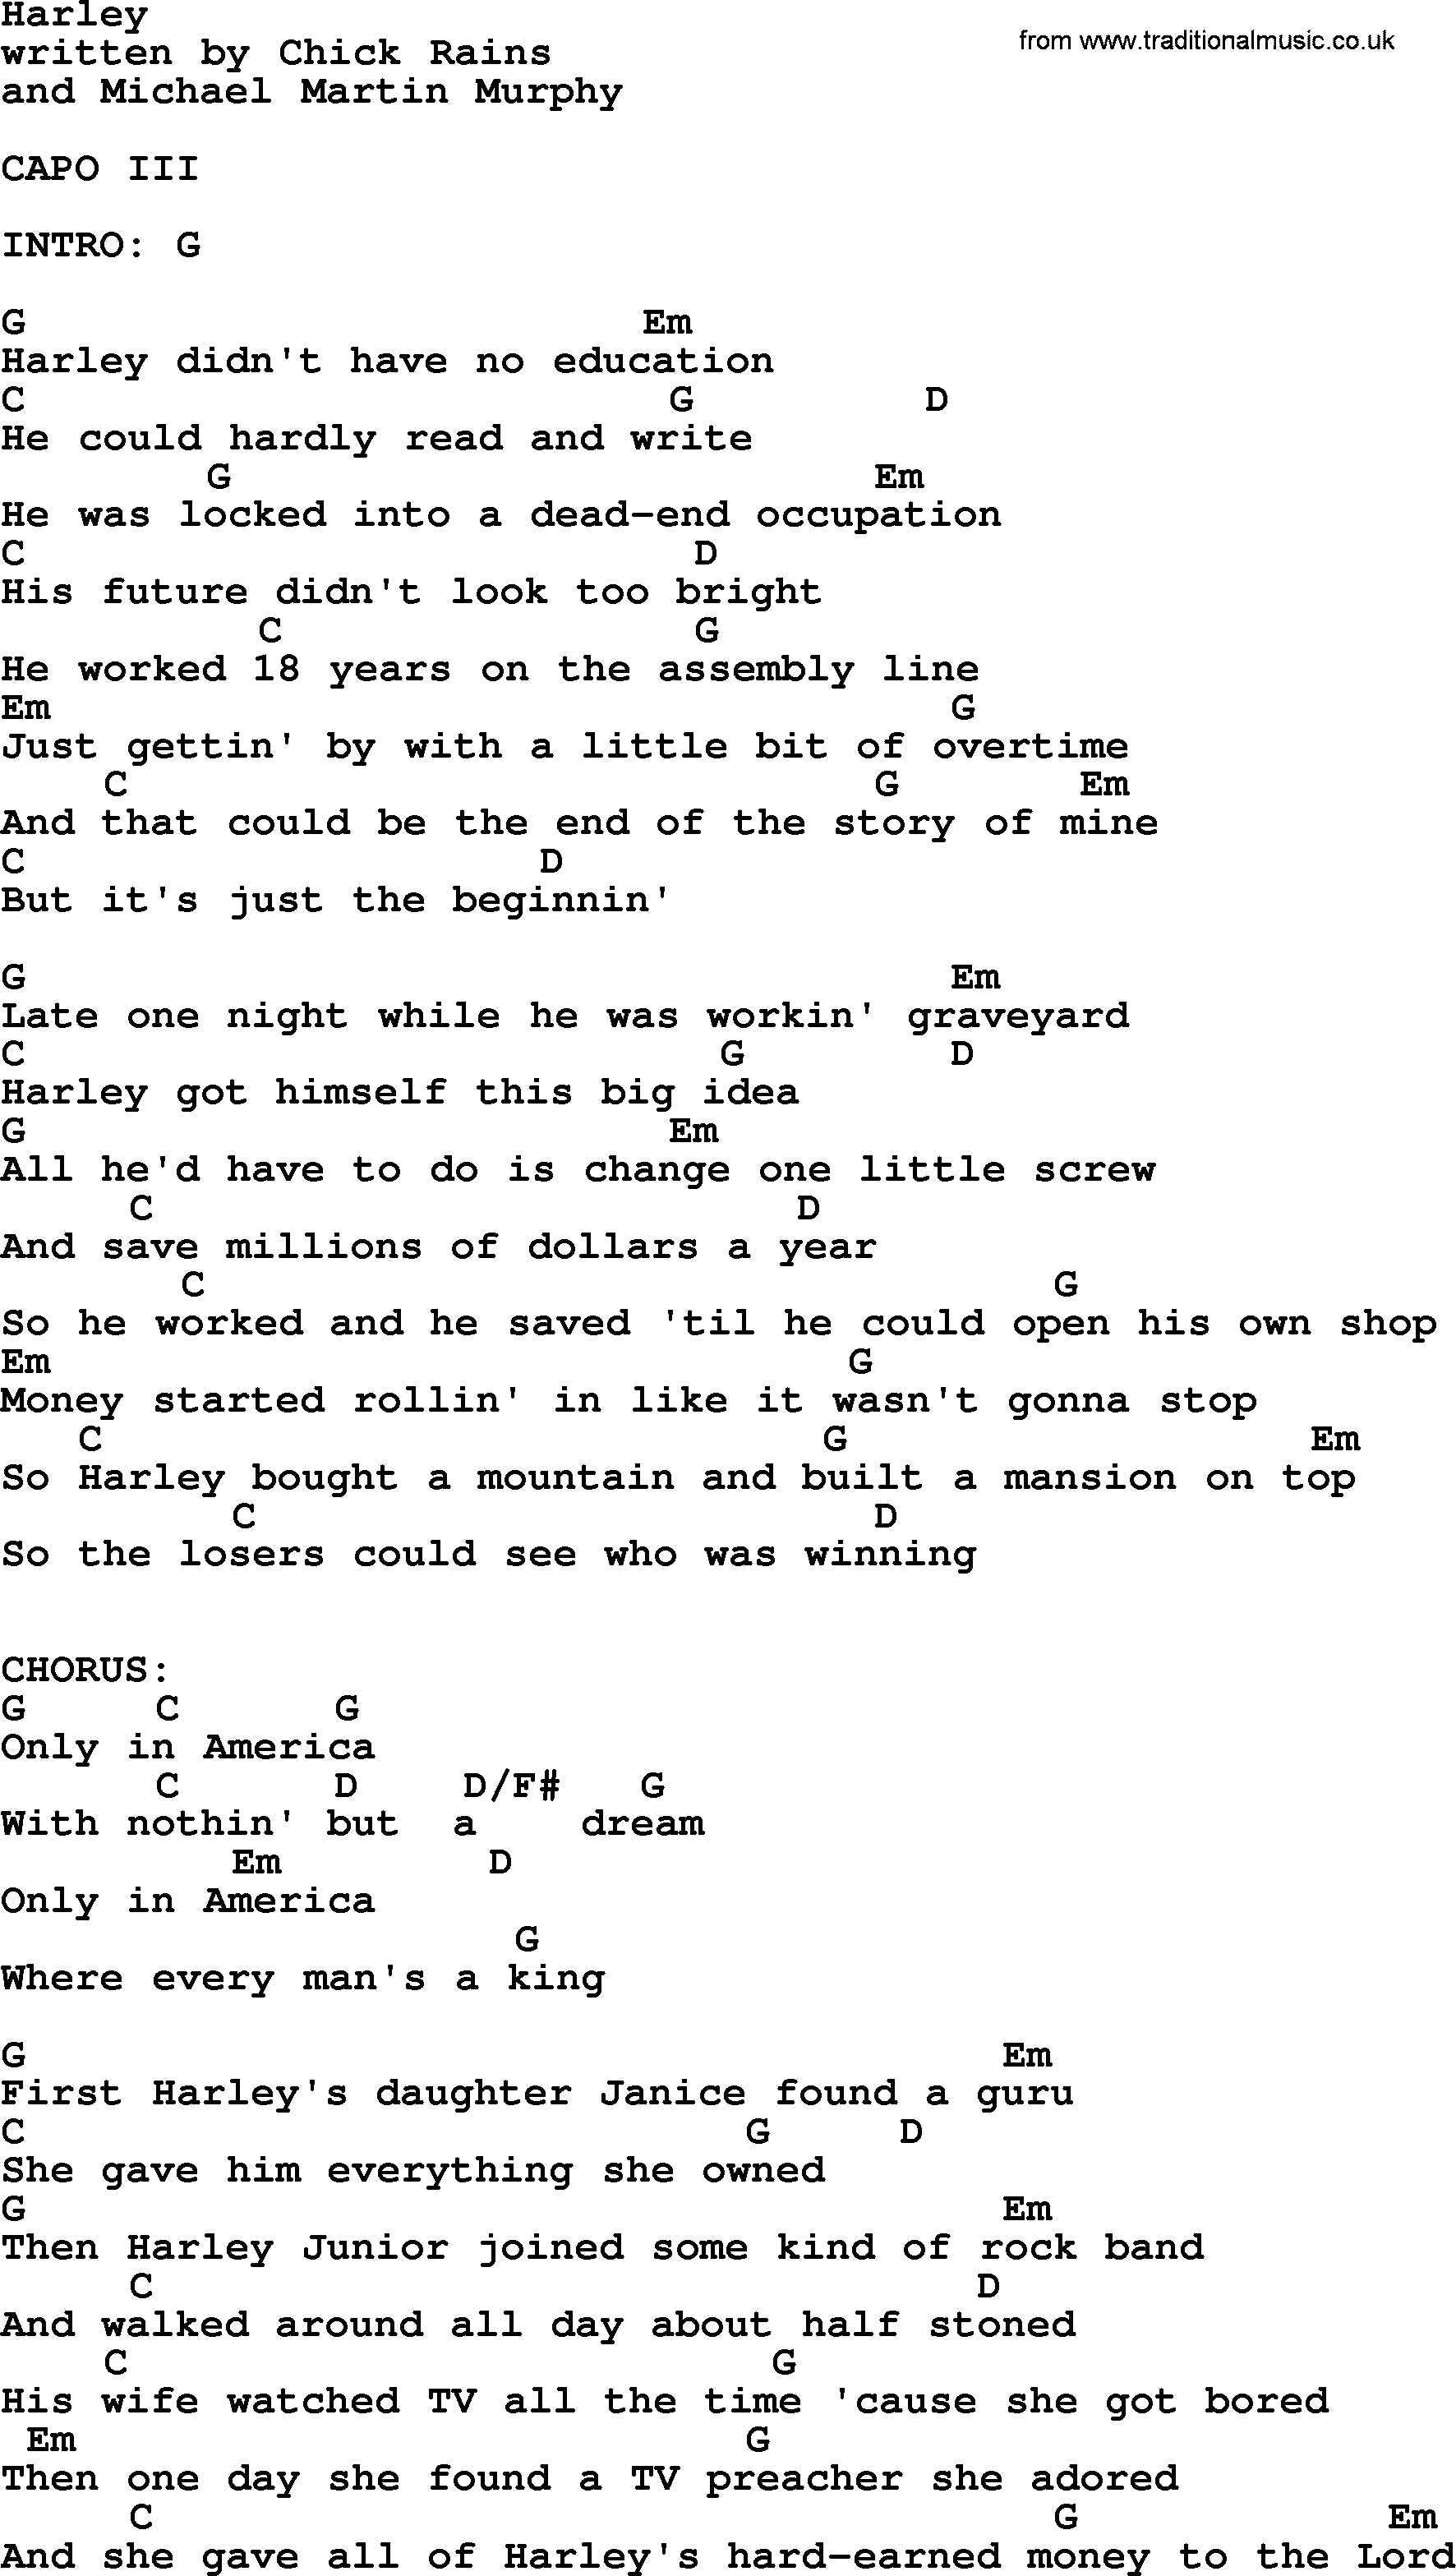 Johnny Cash song Harley, lyrics and chords